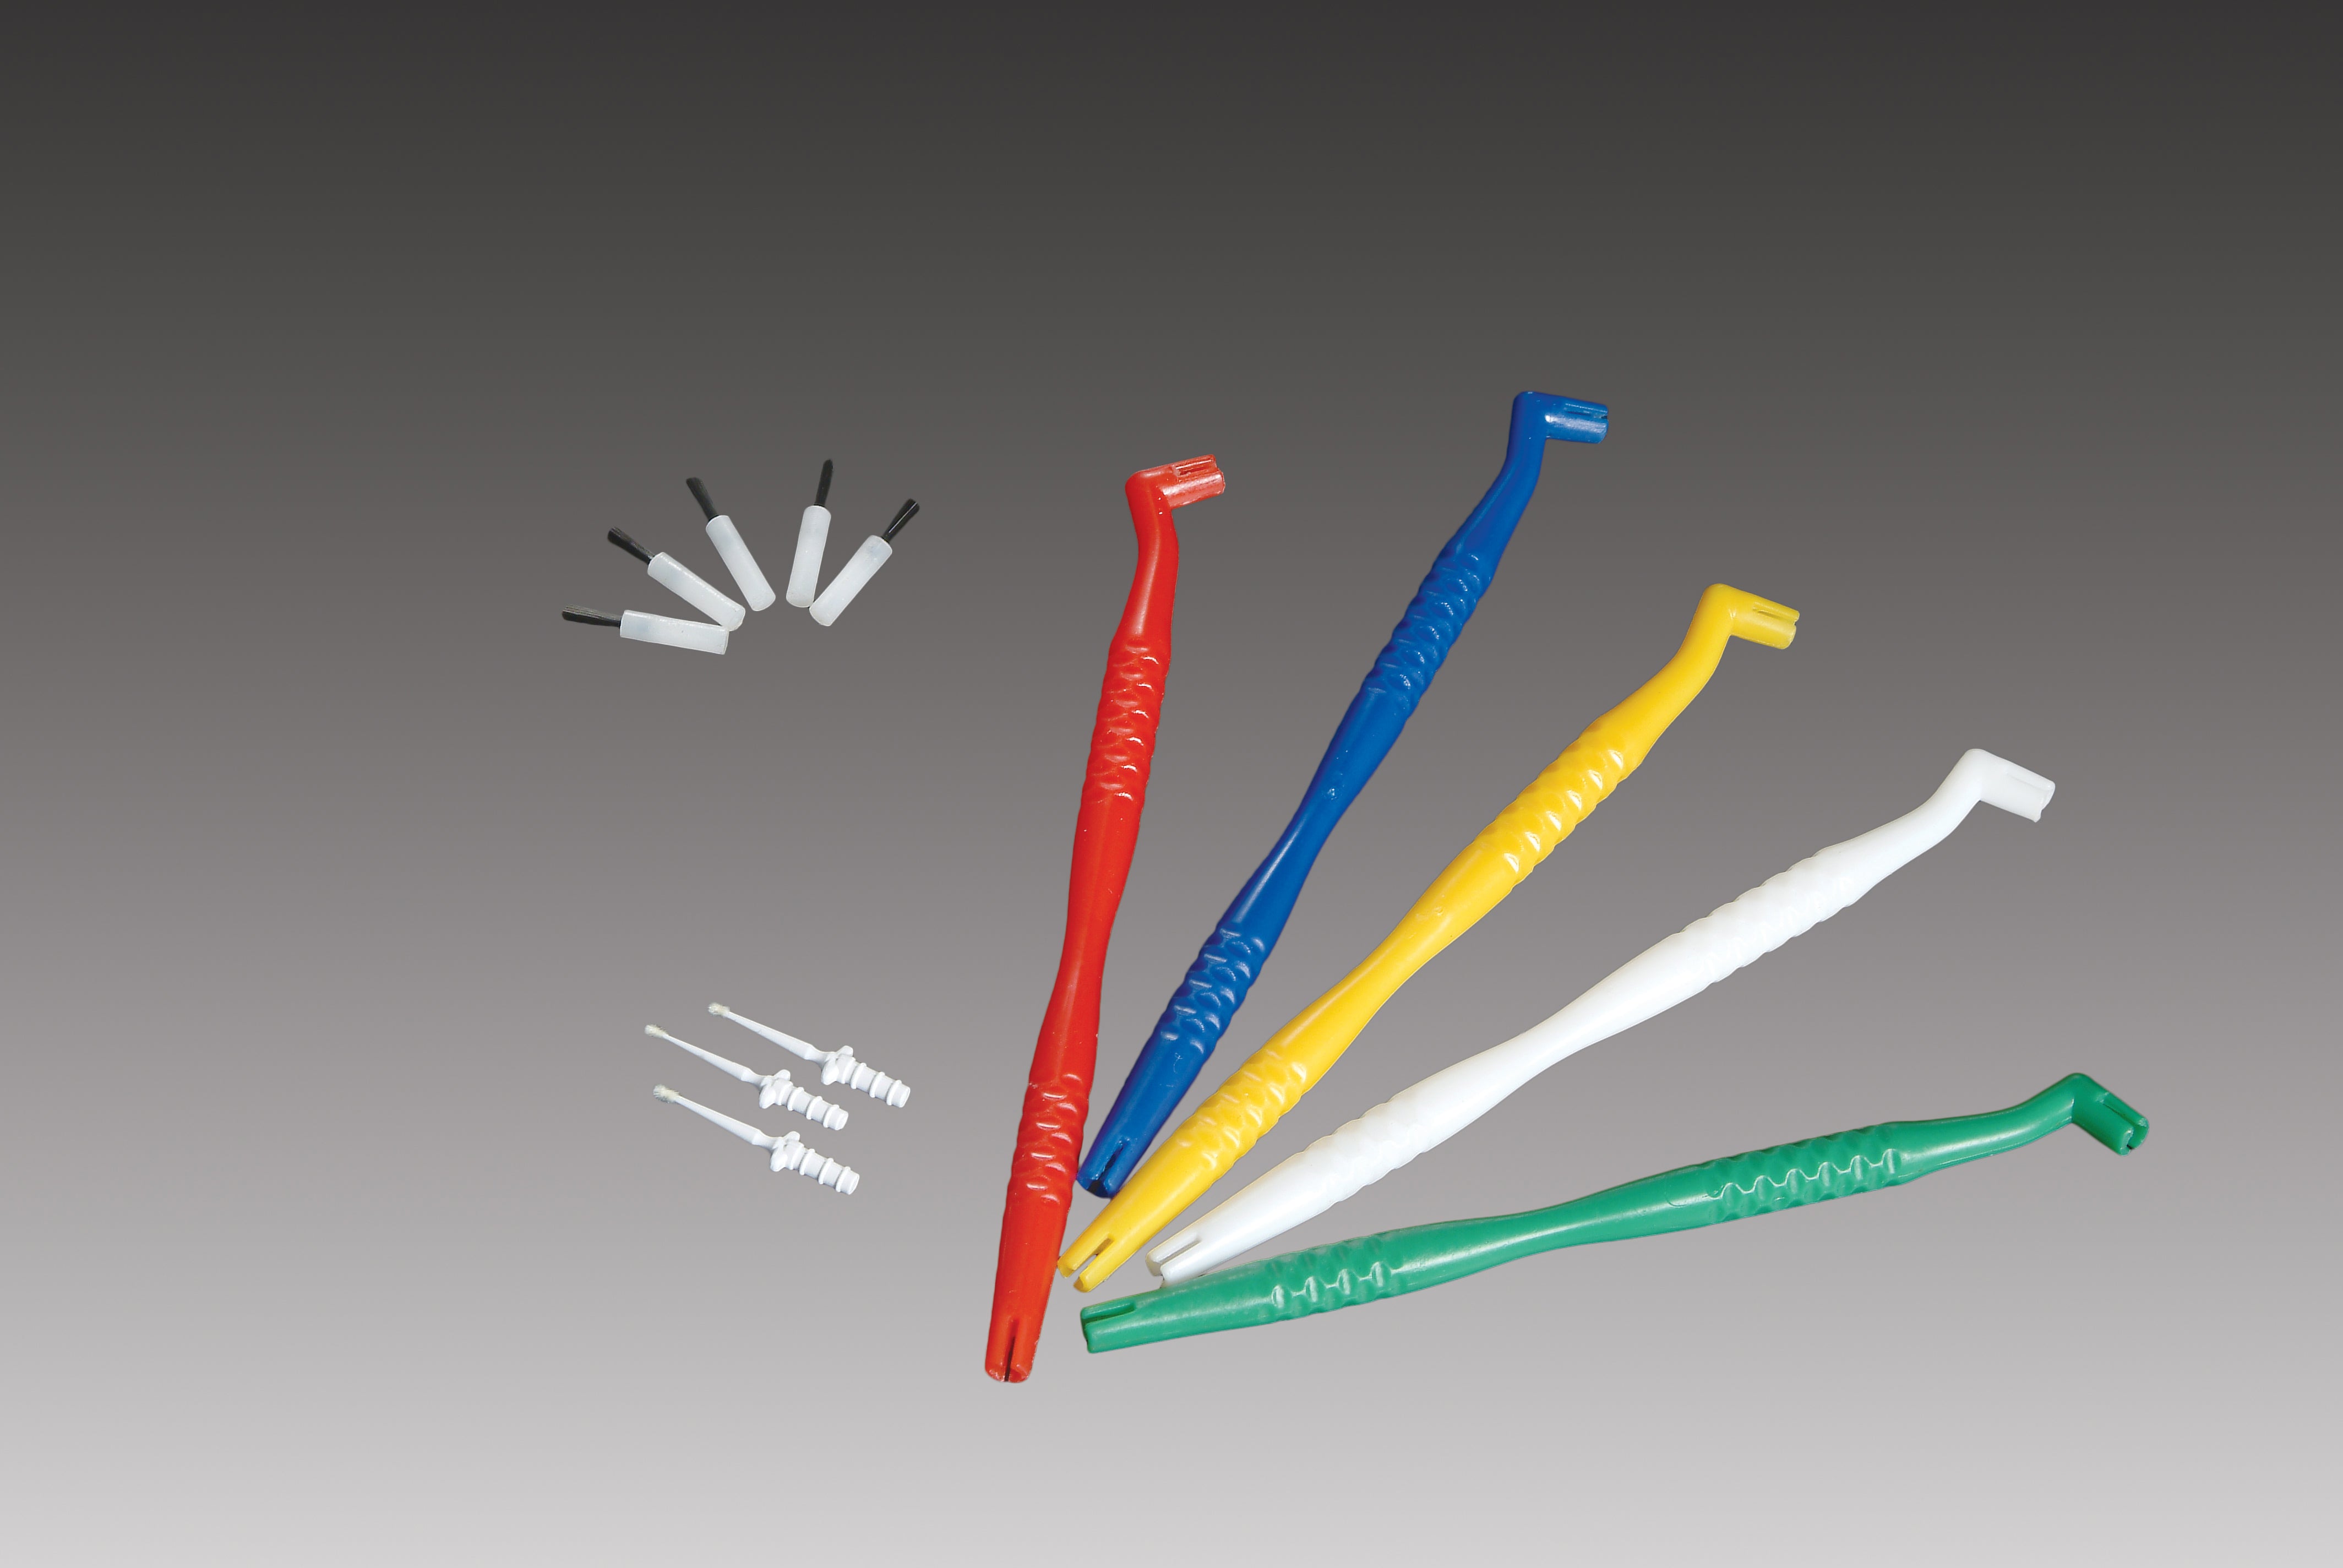 Plasdent Disposable Impression Syringes; Clear; Bendable Tip (50Set/Box)